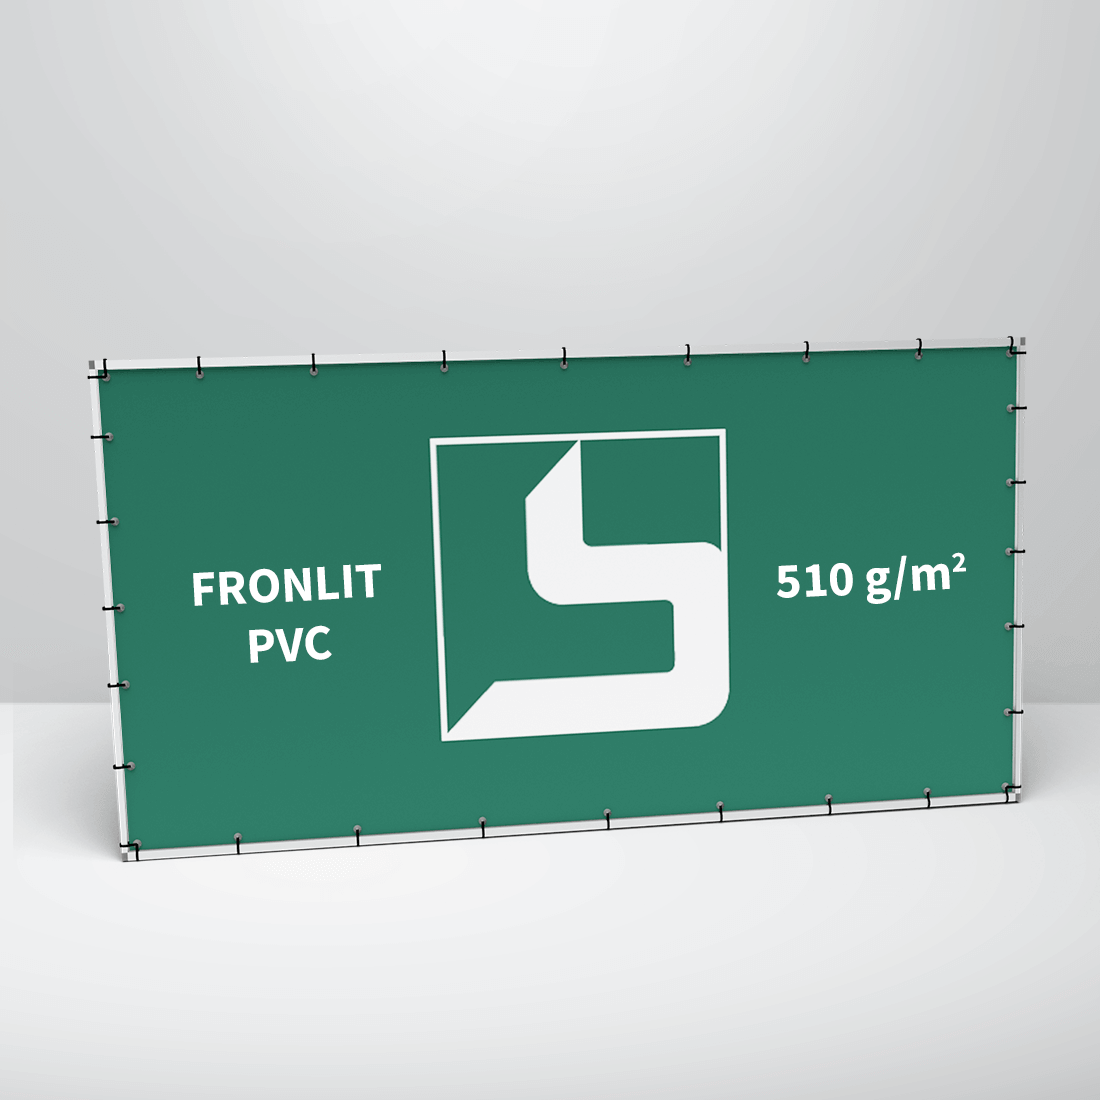 Transparent: Frontlit PVC, 510 g/m2